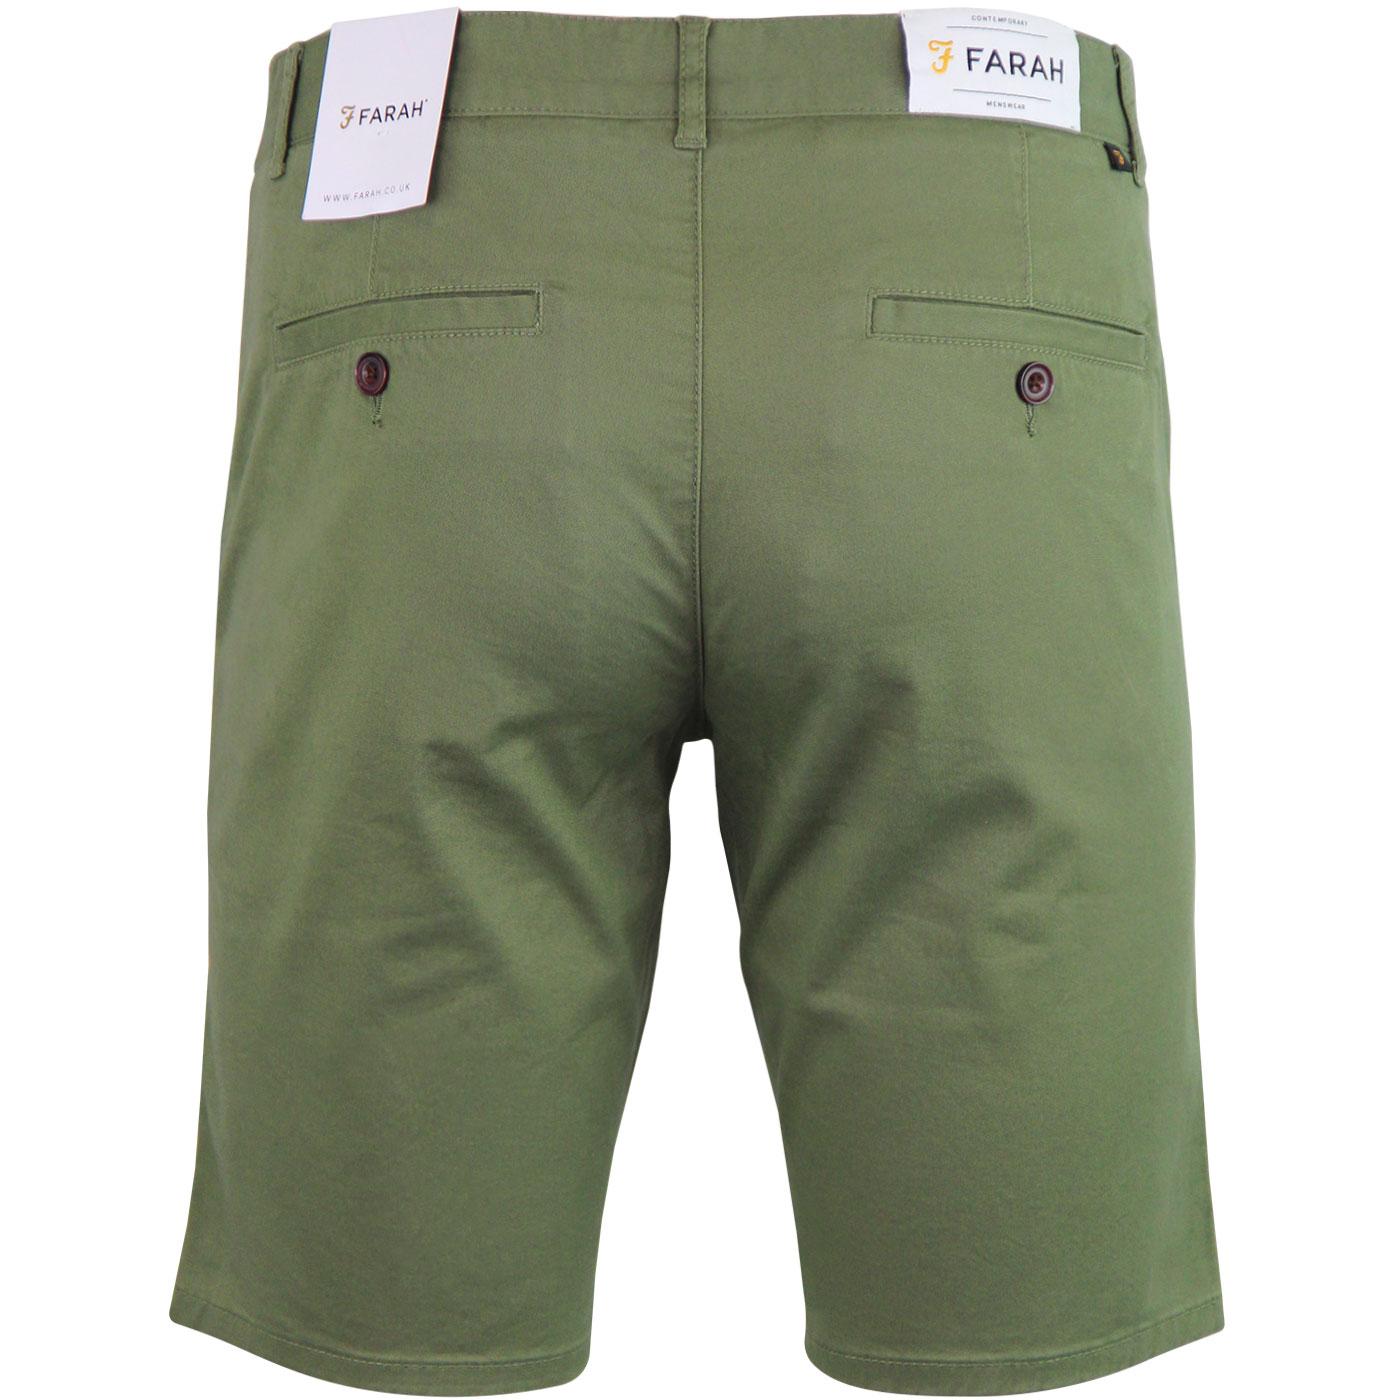 FARAH Hawk Men's Retro Cotton Twill Chino Shorts in Green